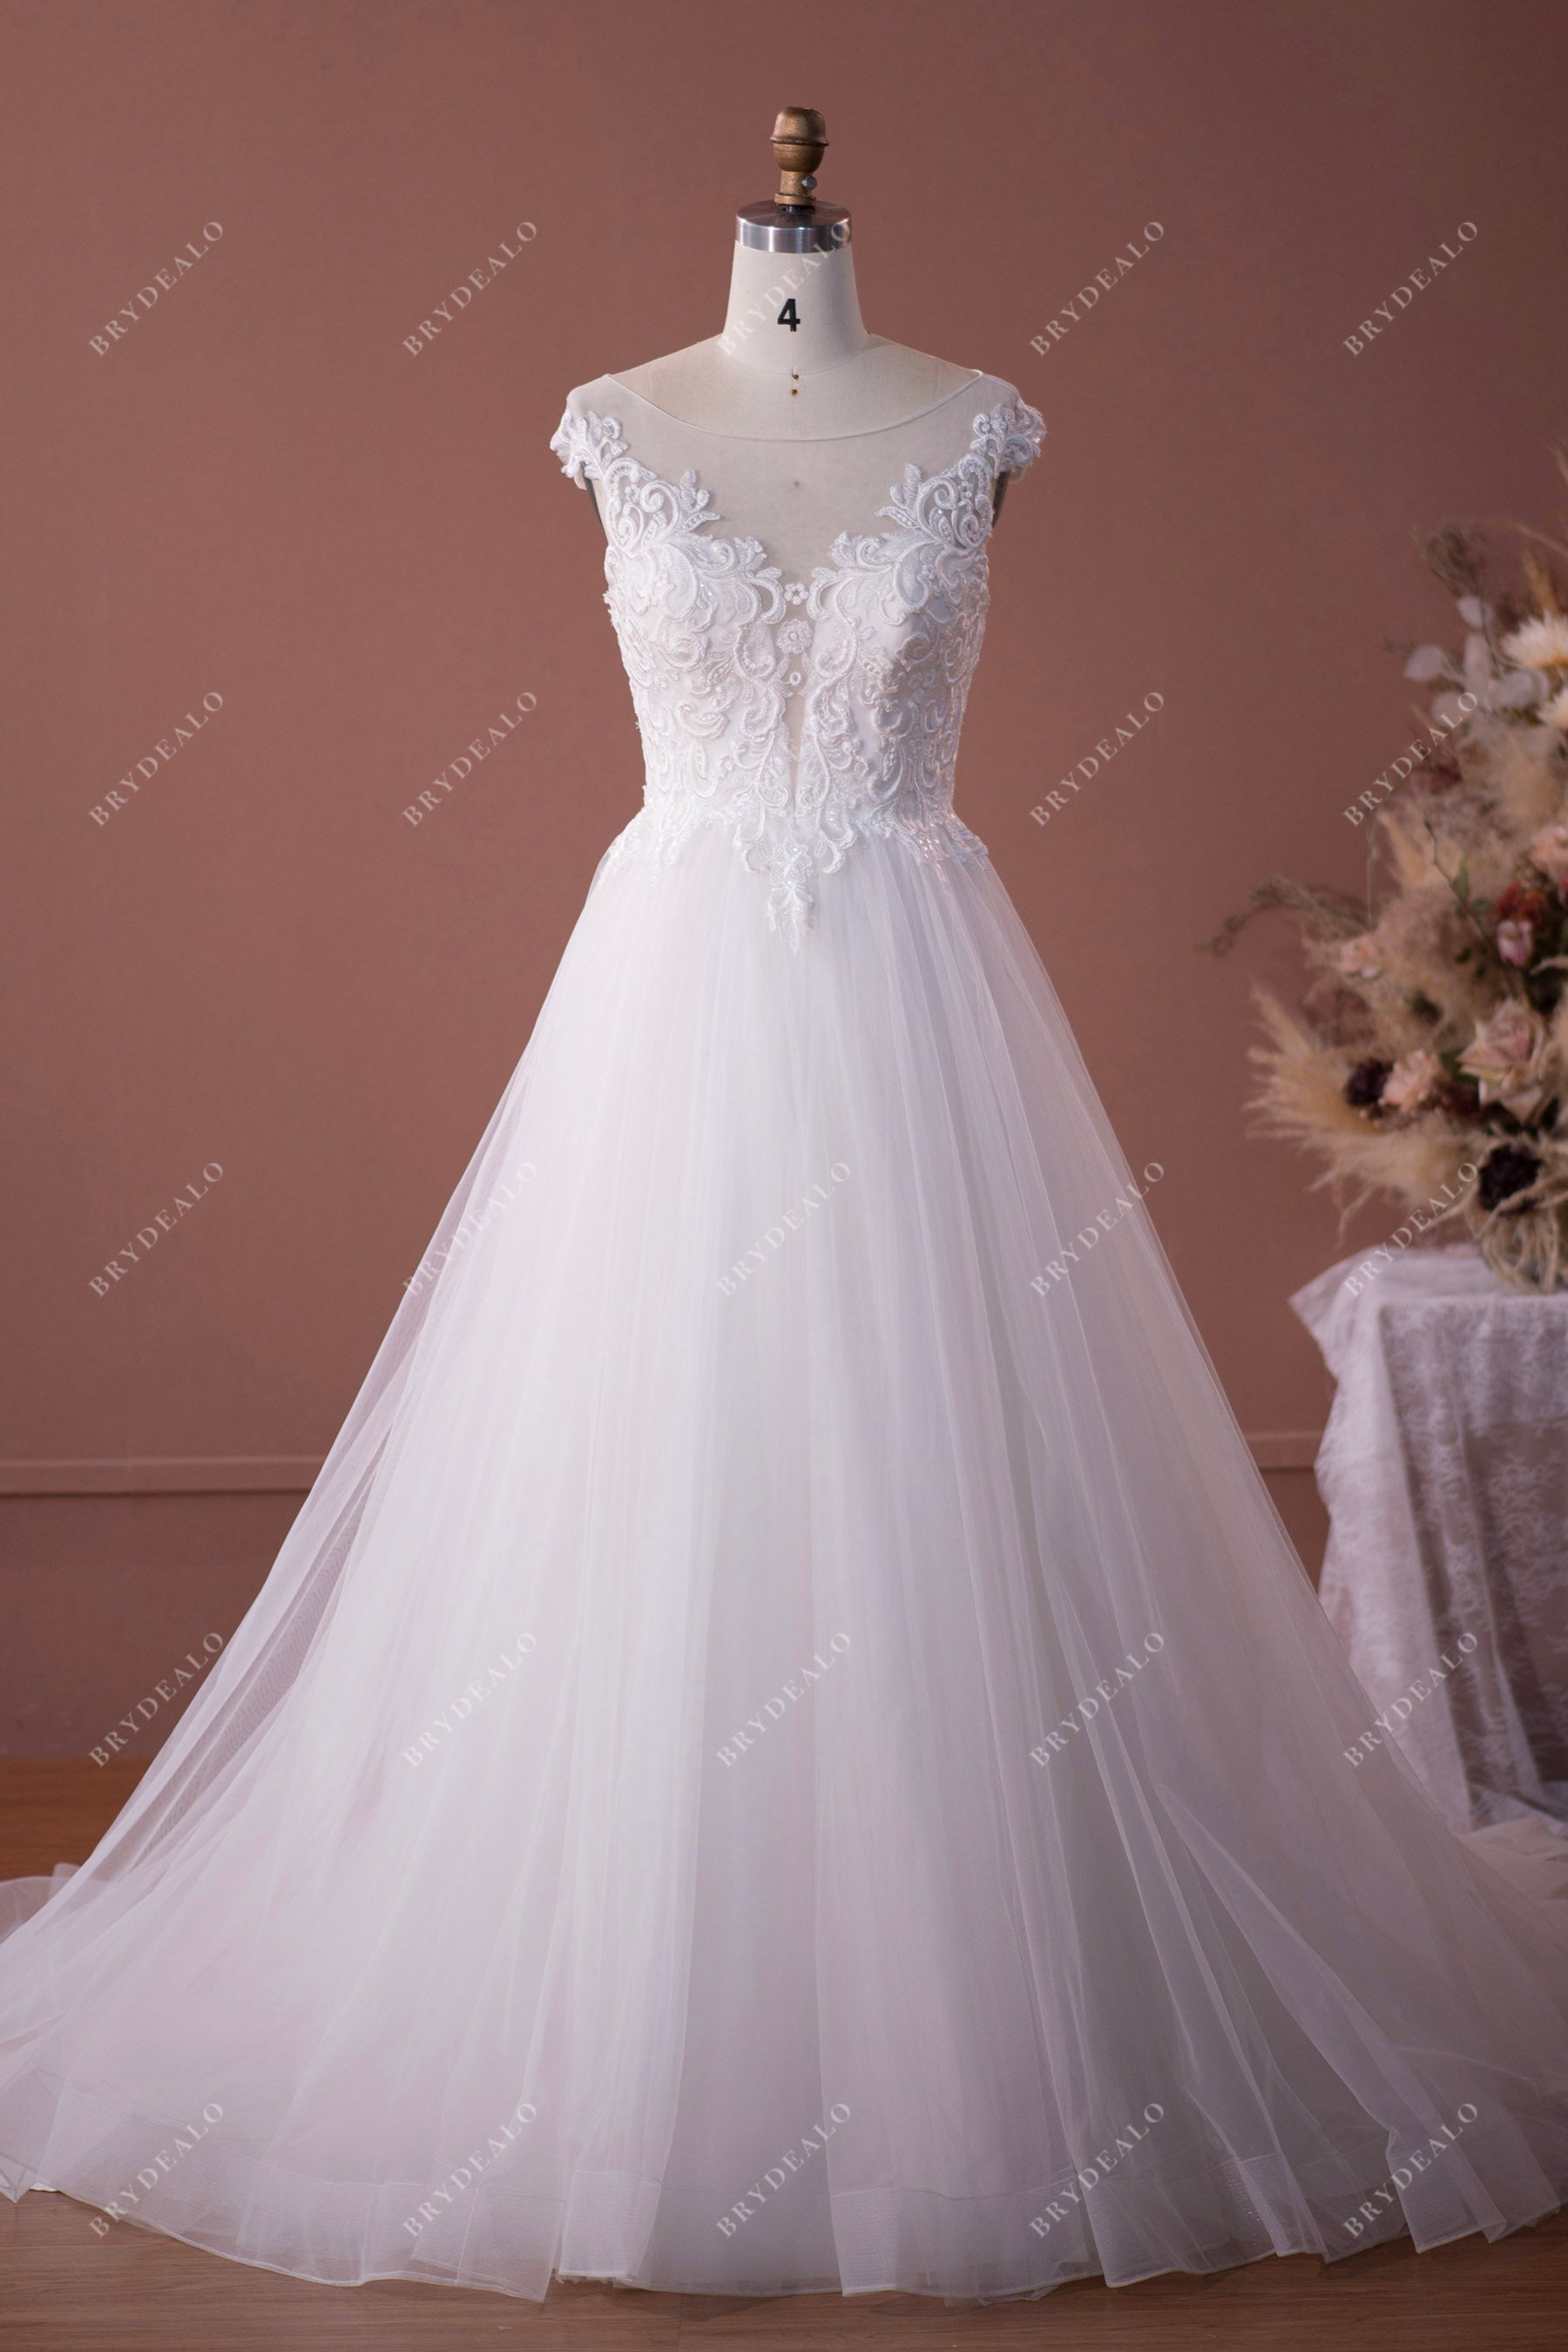 Illusion Neck Cap Sleeve Lace Tulle A-line Wedding Dress Sample Sale